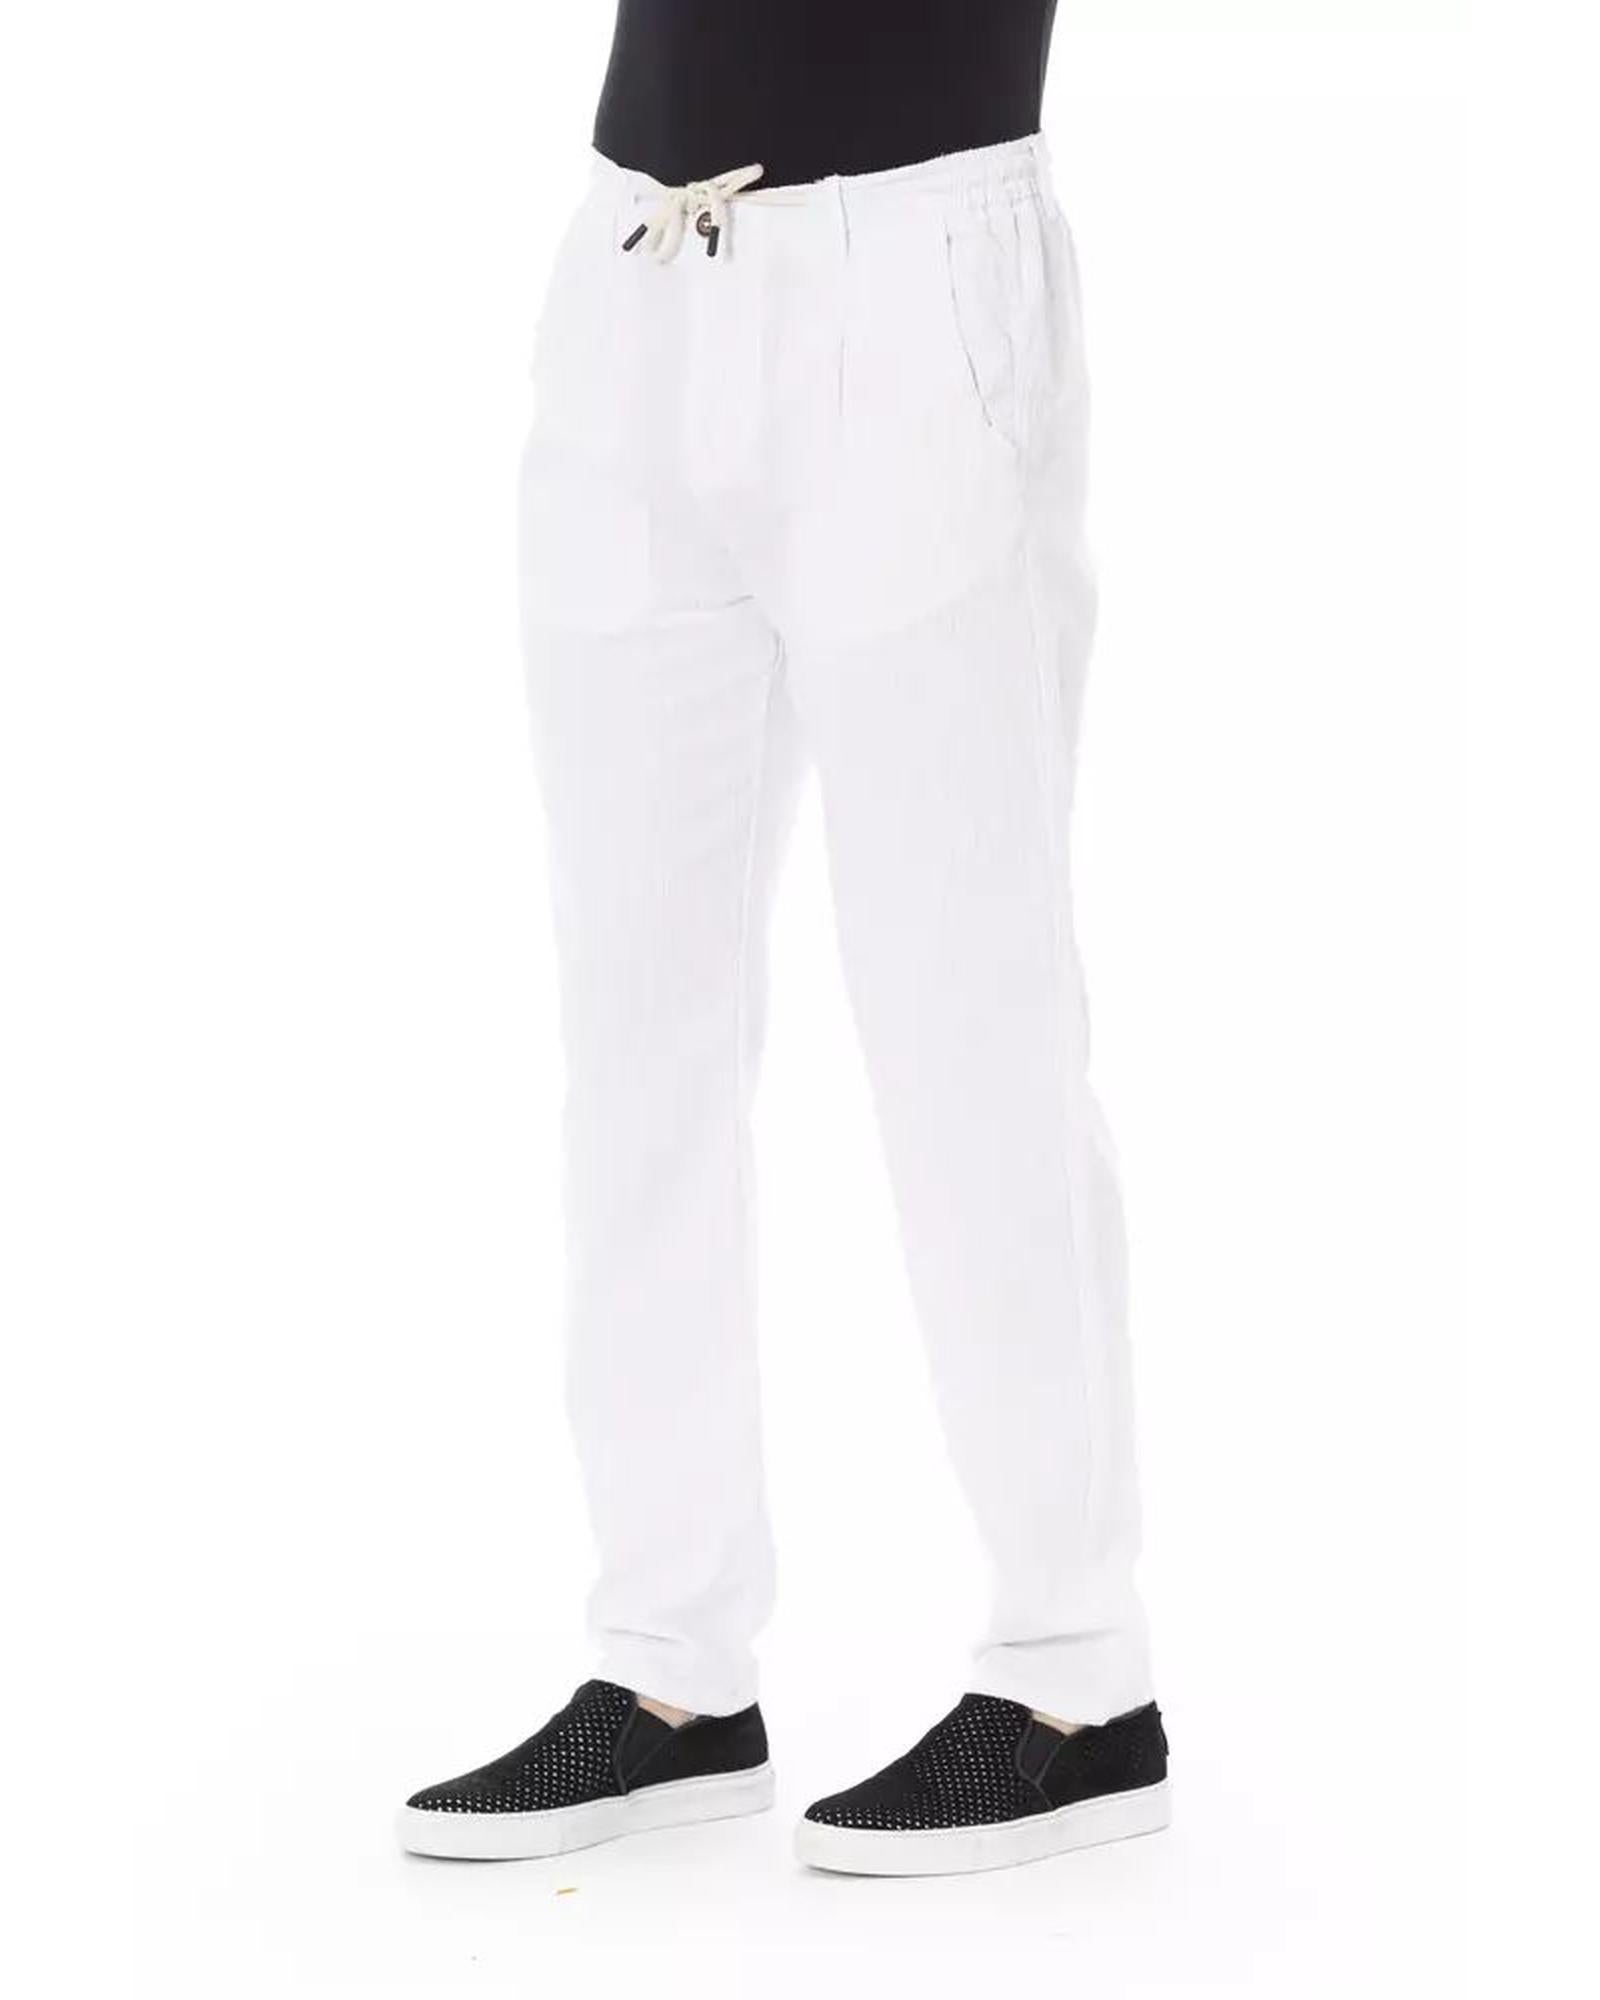 Men's White Cotton Jeans & Pant - W36 US